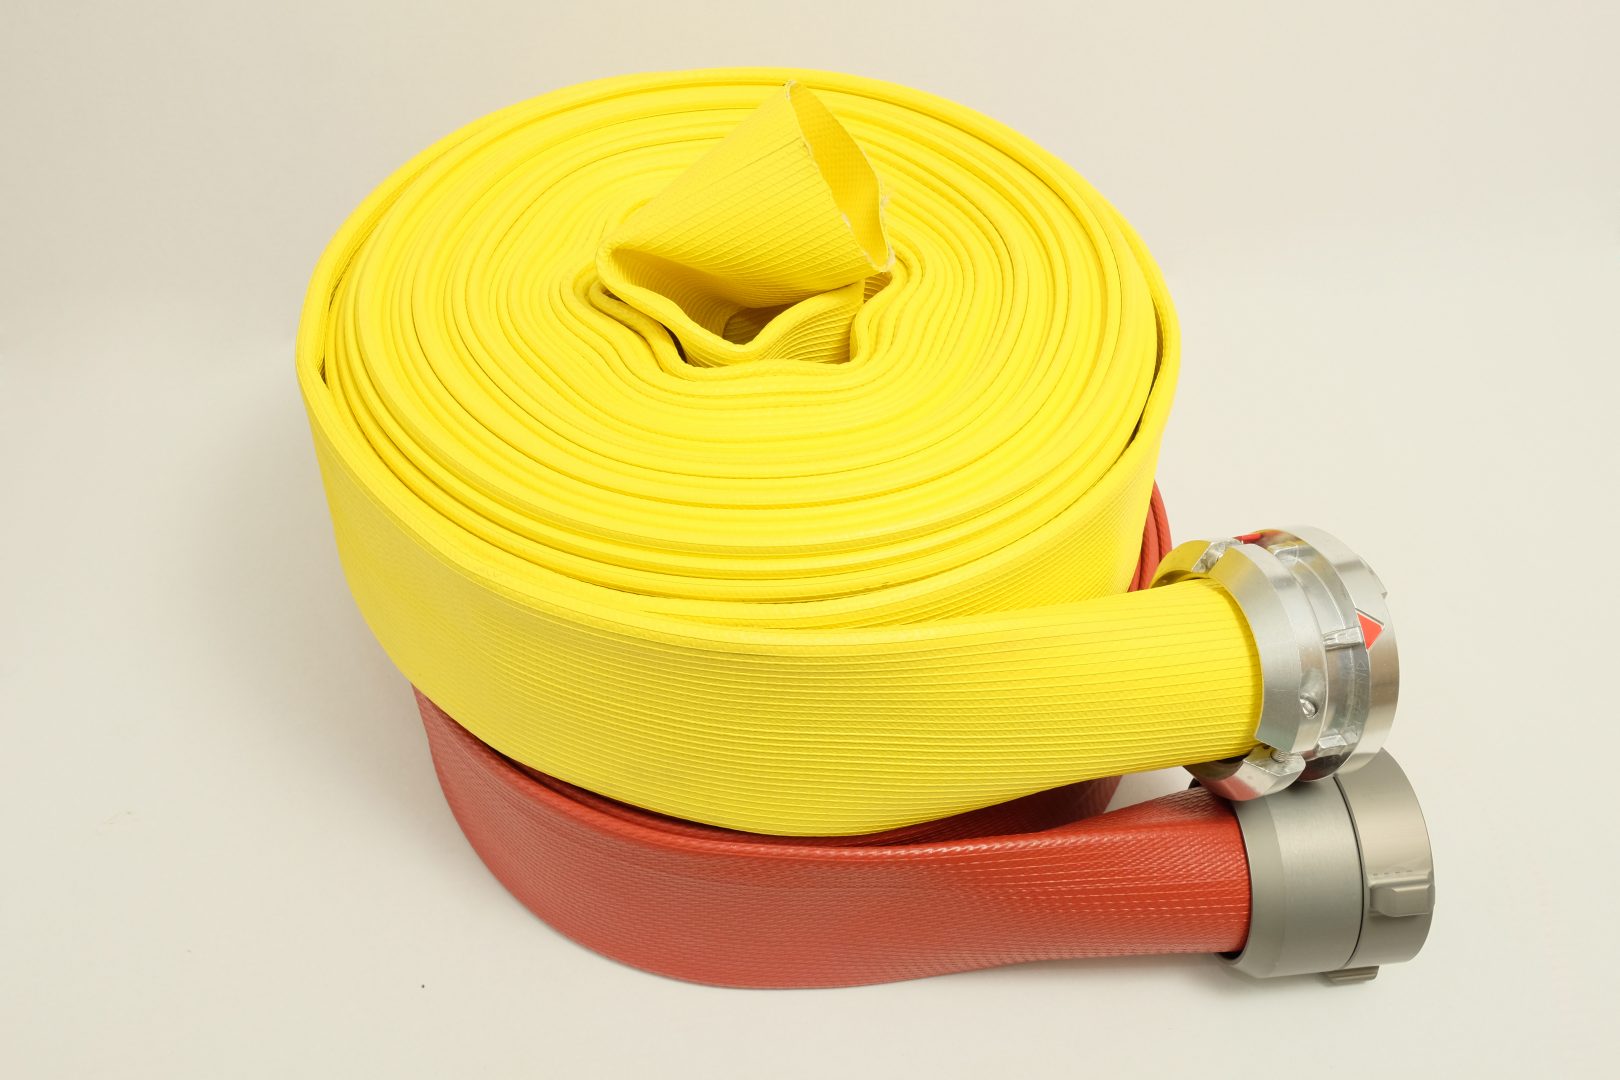 https://rawhidefirehose.com/wp-content/uploads/2015/06/5-ldh-supply-rubber-coverd-layflat-fire-hose-coupled-aluminum-storz-copy.jpg